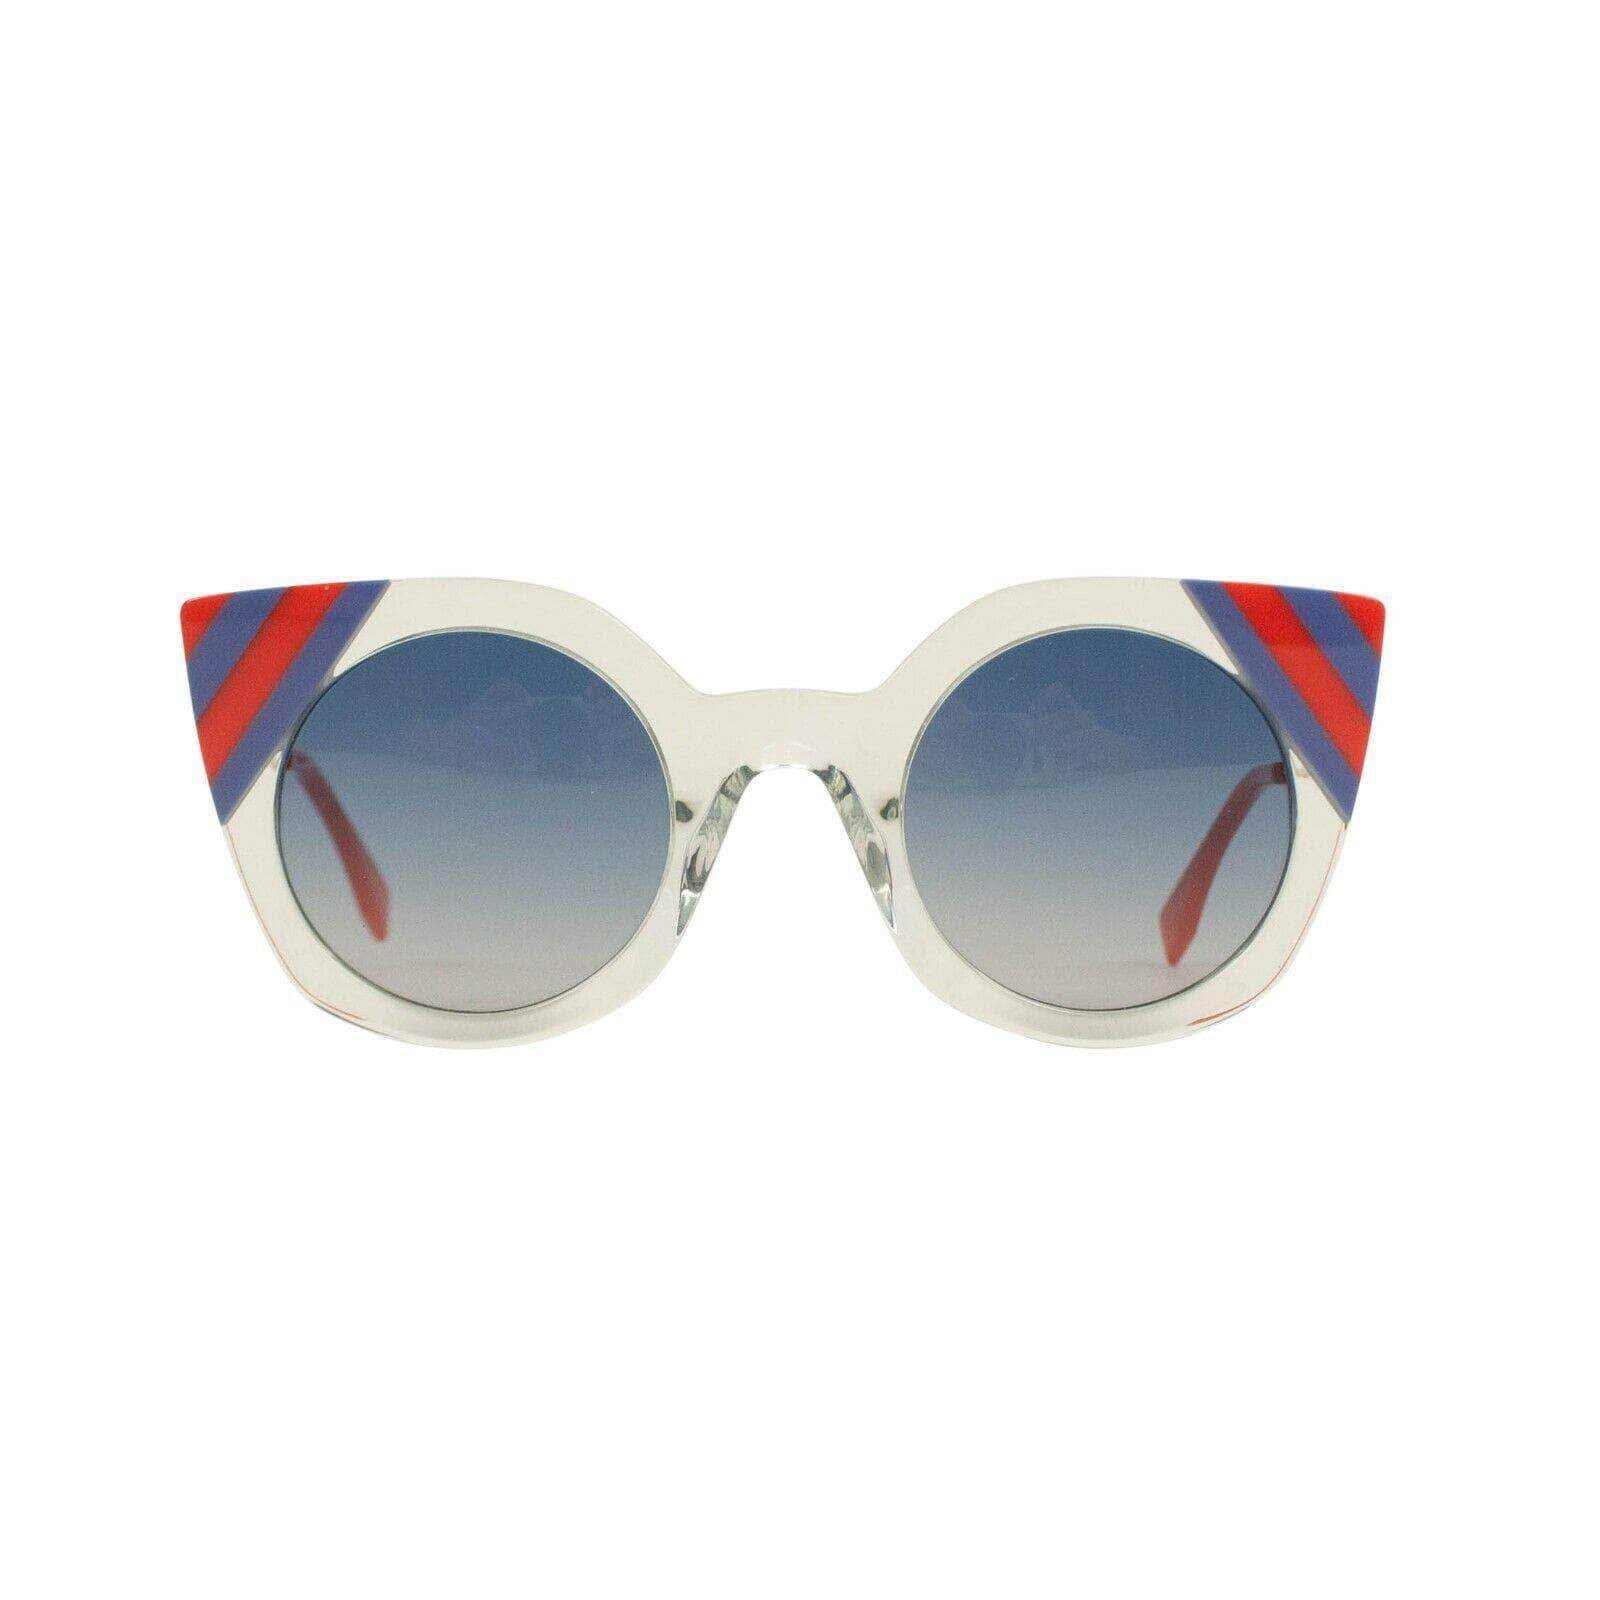 Fendi sunglasses  Cat eye sunglasses women, Cat eye frame sunglasses, Fendi  sunglasses